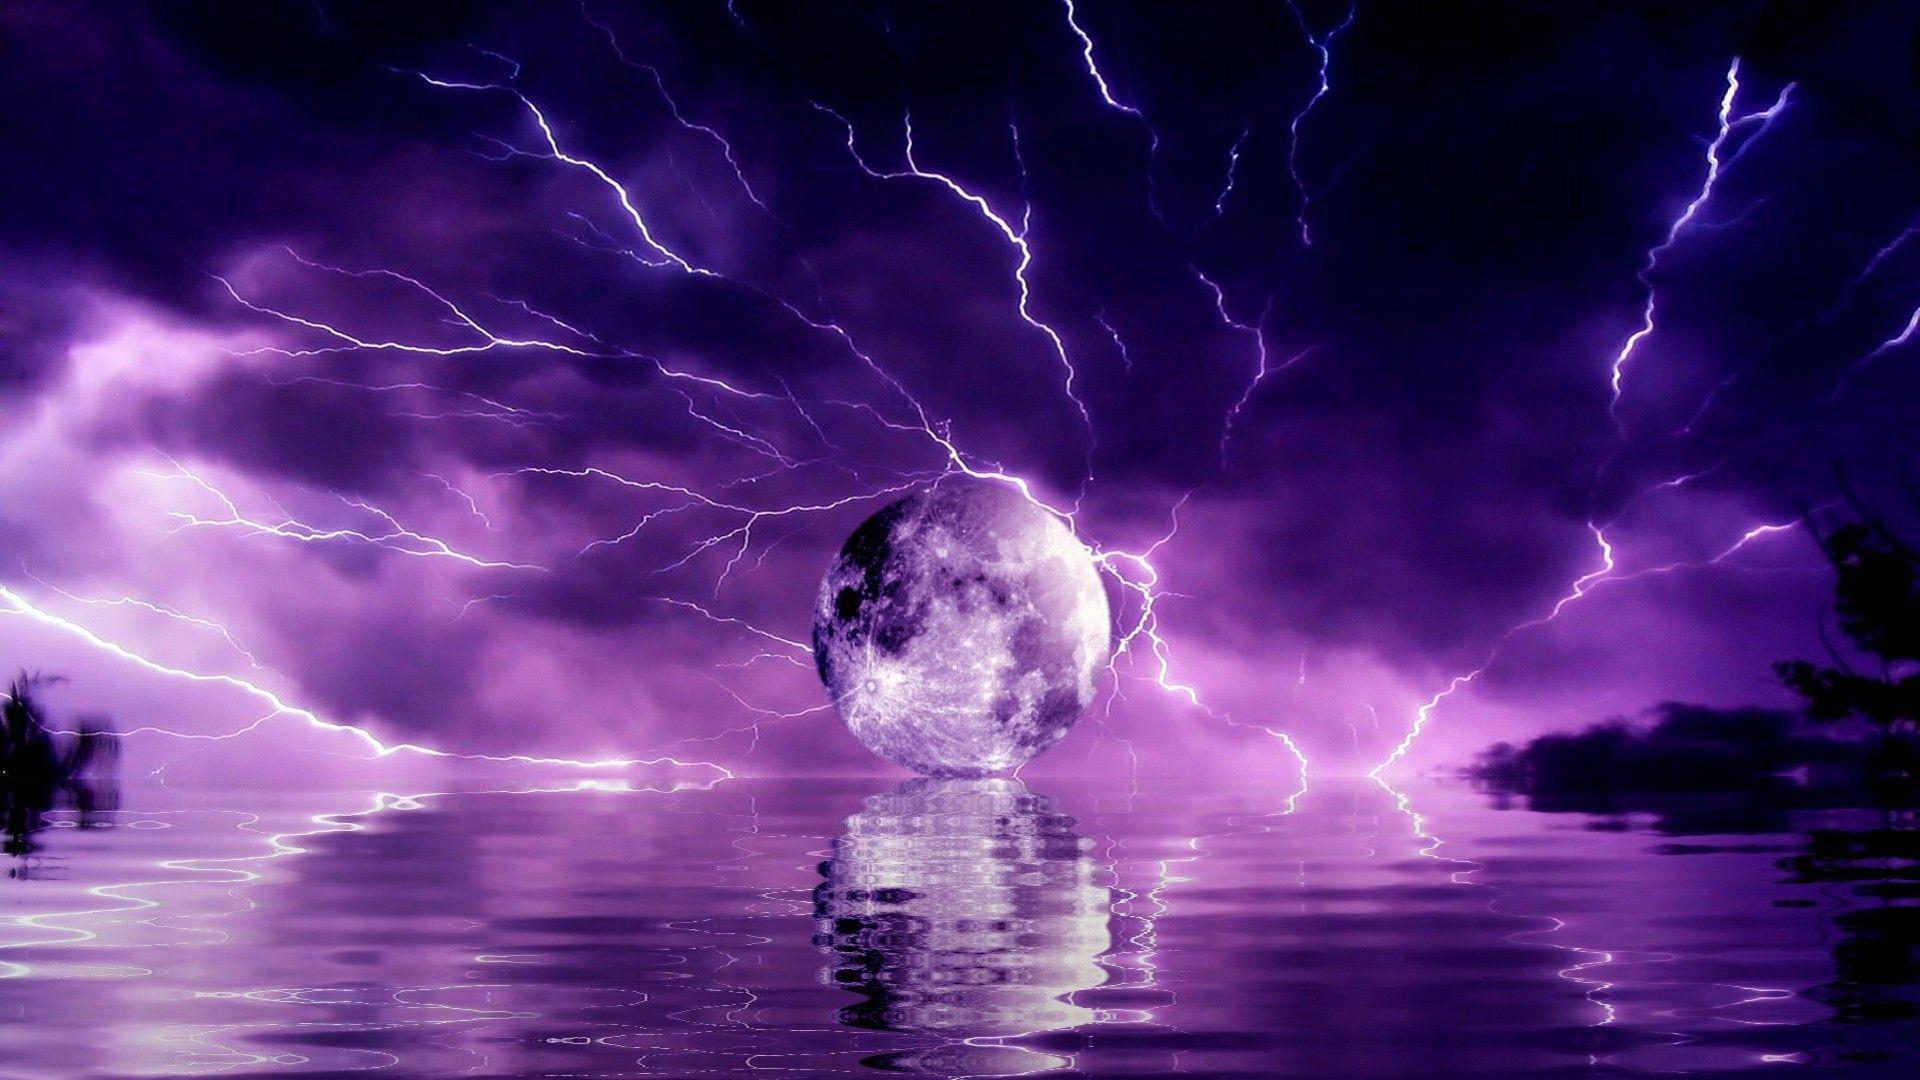 Purple Storm Wallpapers - Top Free Purple Storm Backgrounds